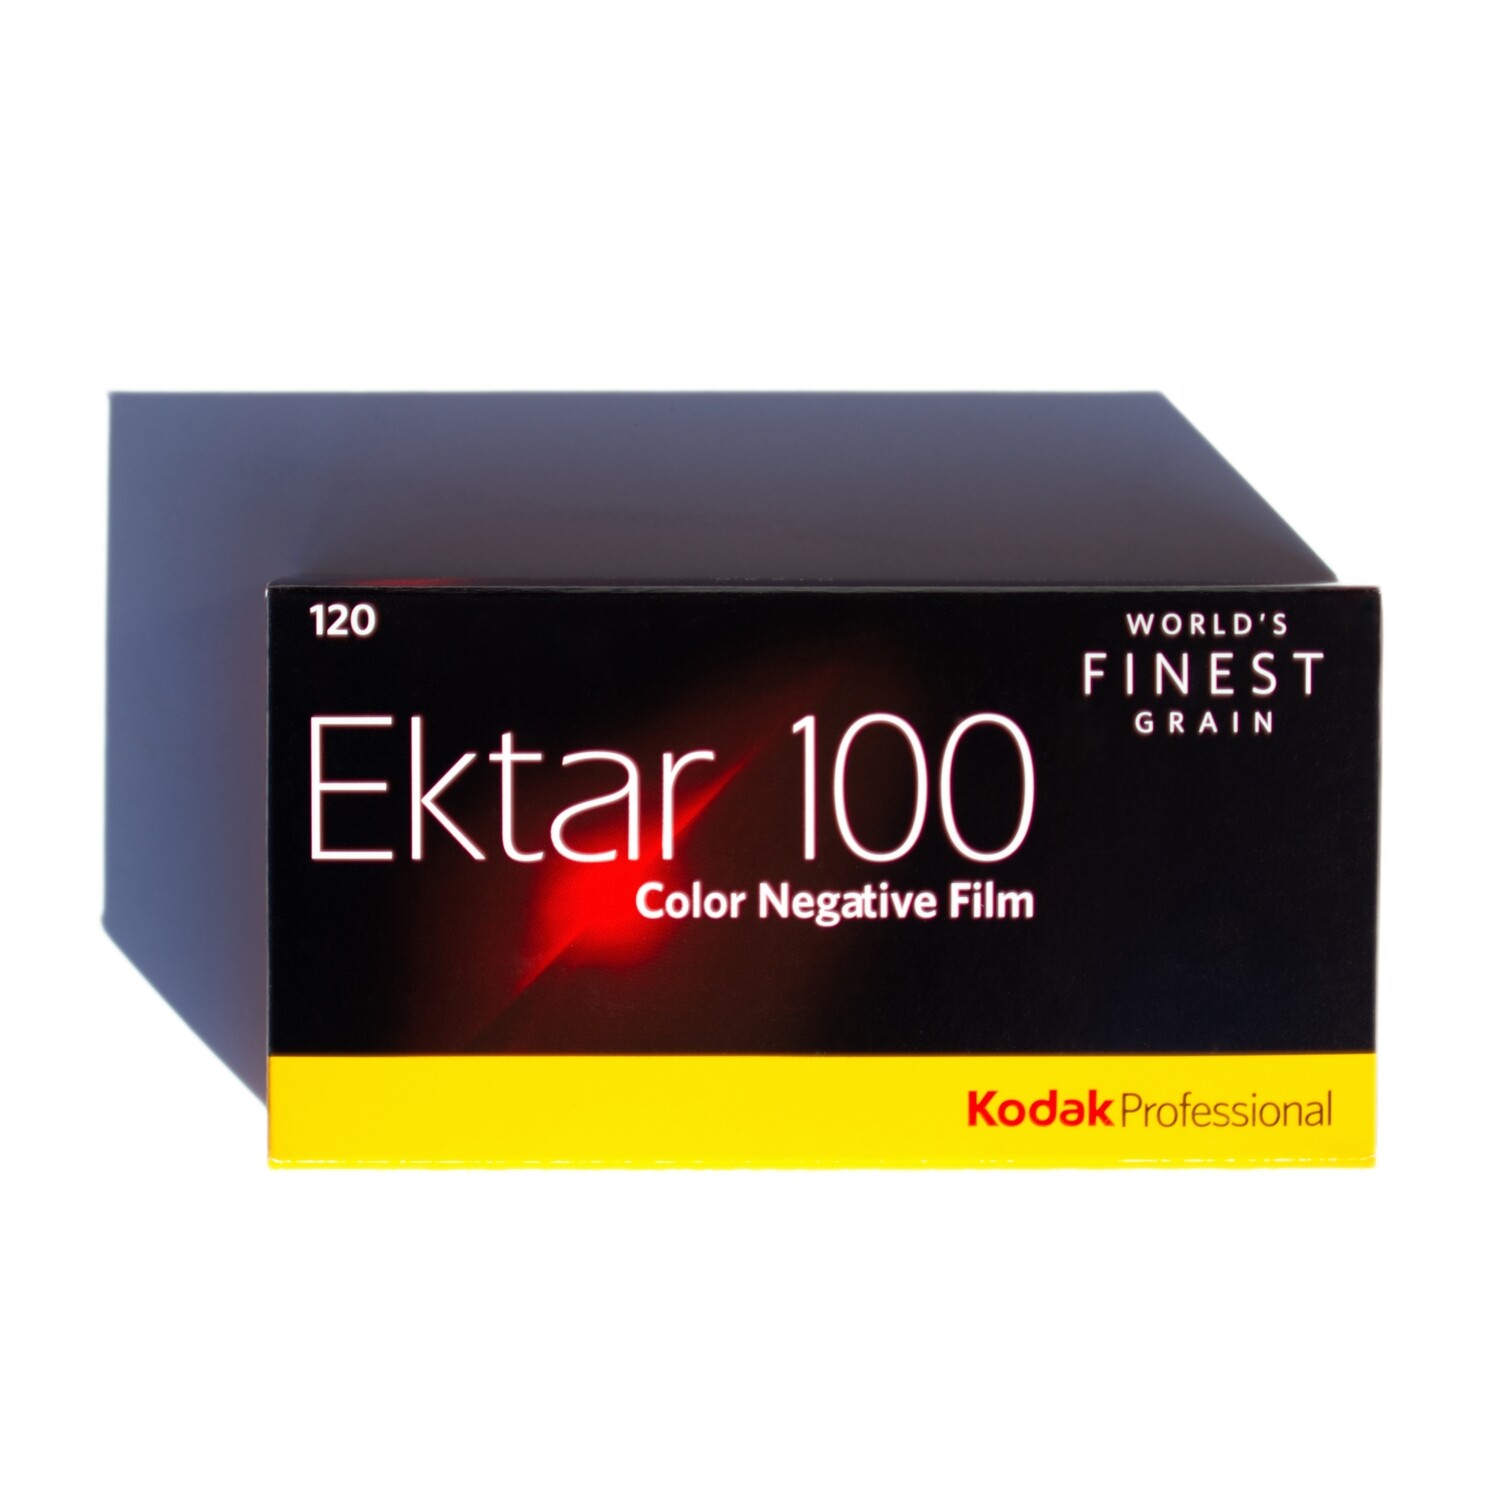 Kodak Professional Ektar 100 120 - Single Roll